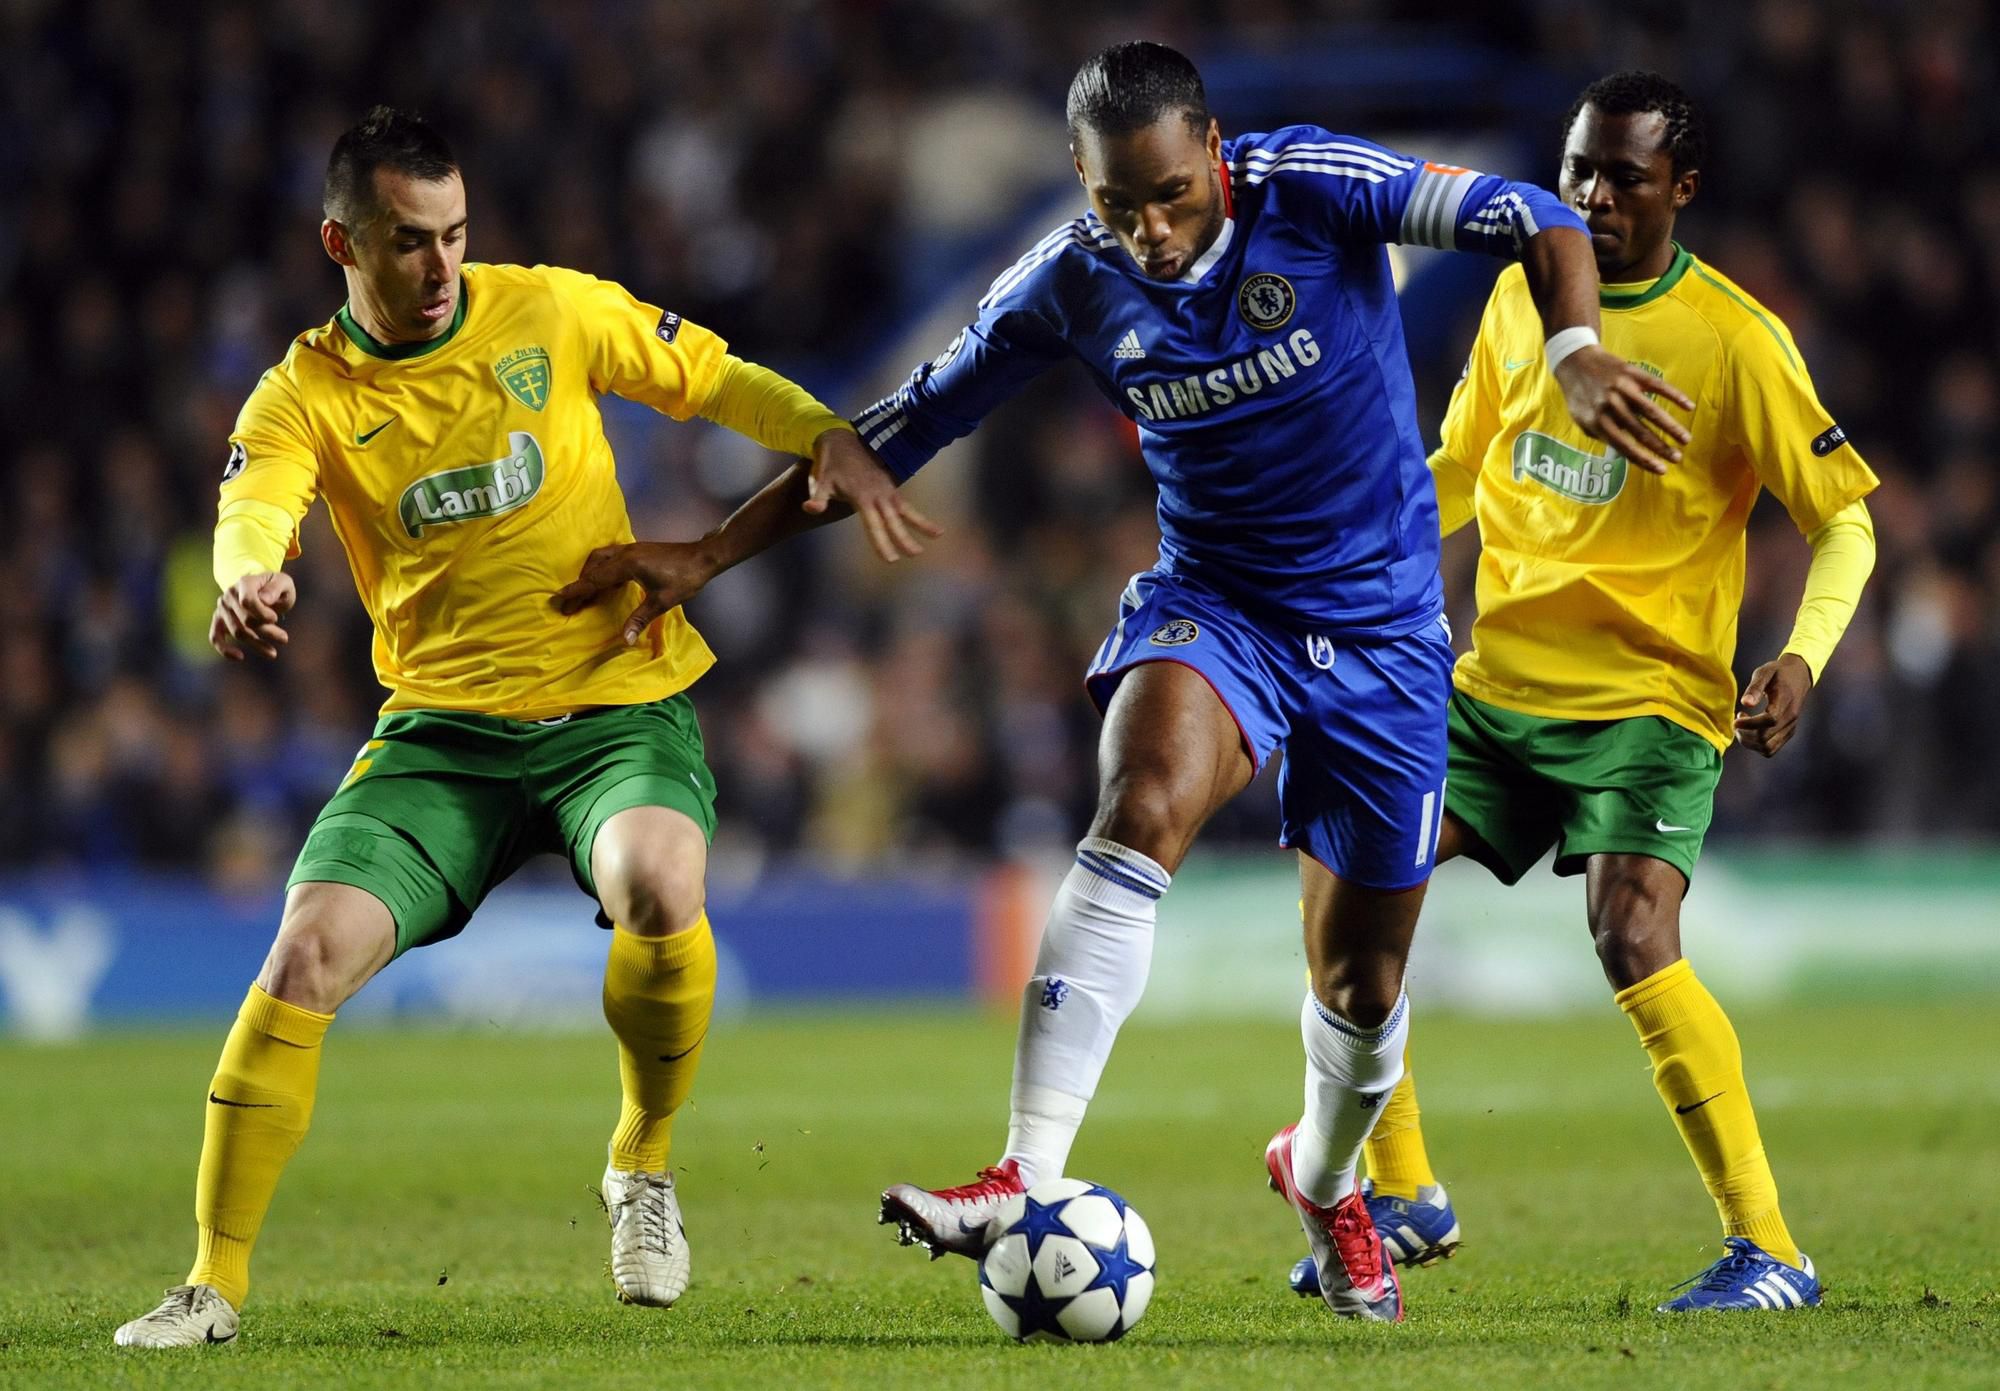 Ľubomír Guldan, vpravo Babatounde Bello (obaja Žilina) a uprostred Didier Drogba (Chelsea)